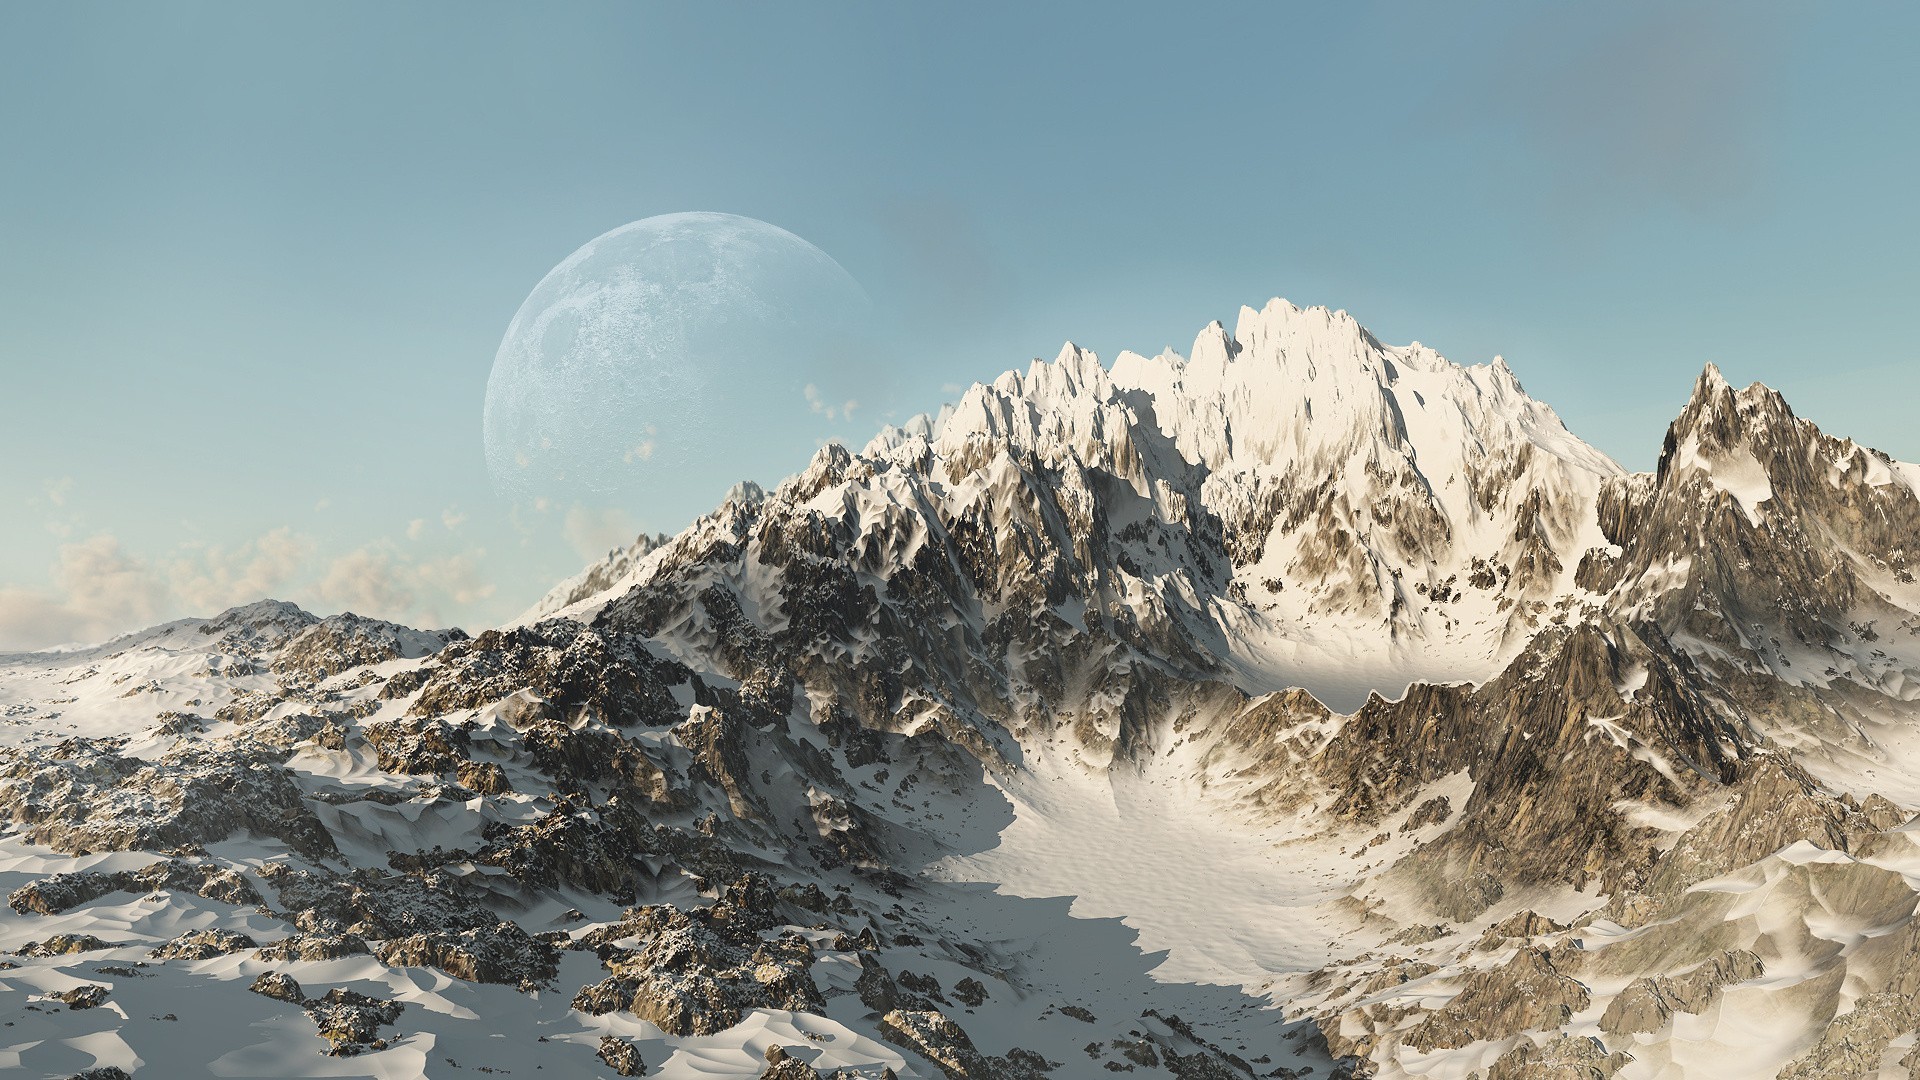 General 1920x1080 digital art mountains snow landscape planet outdoors snowy peak nature